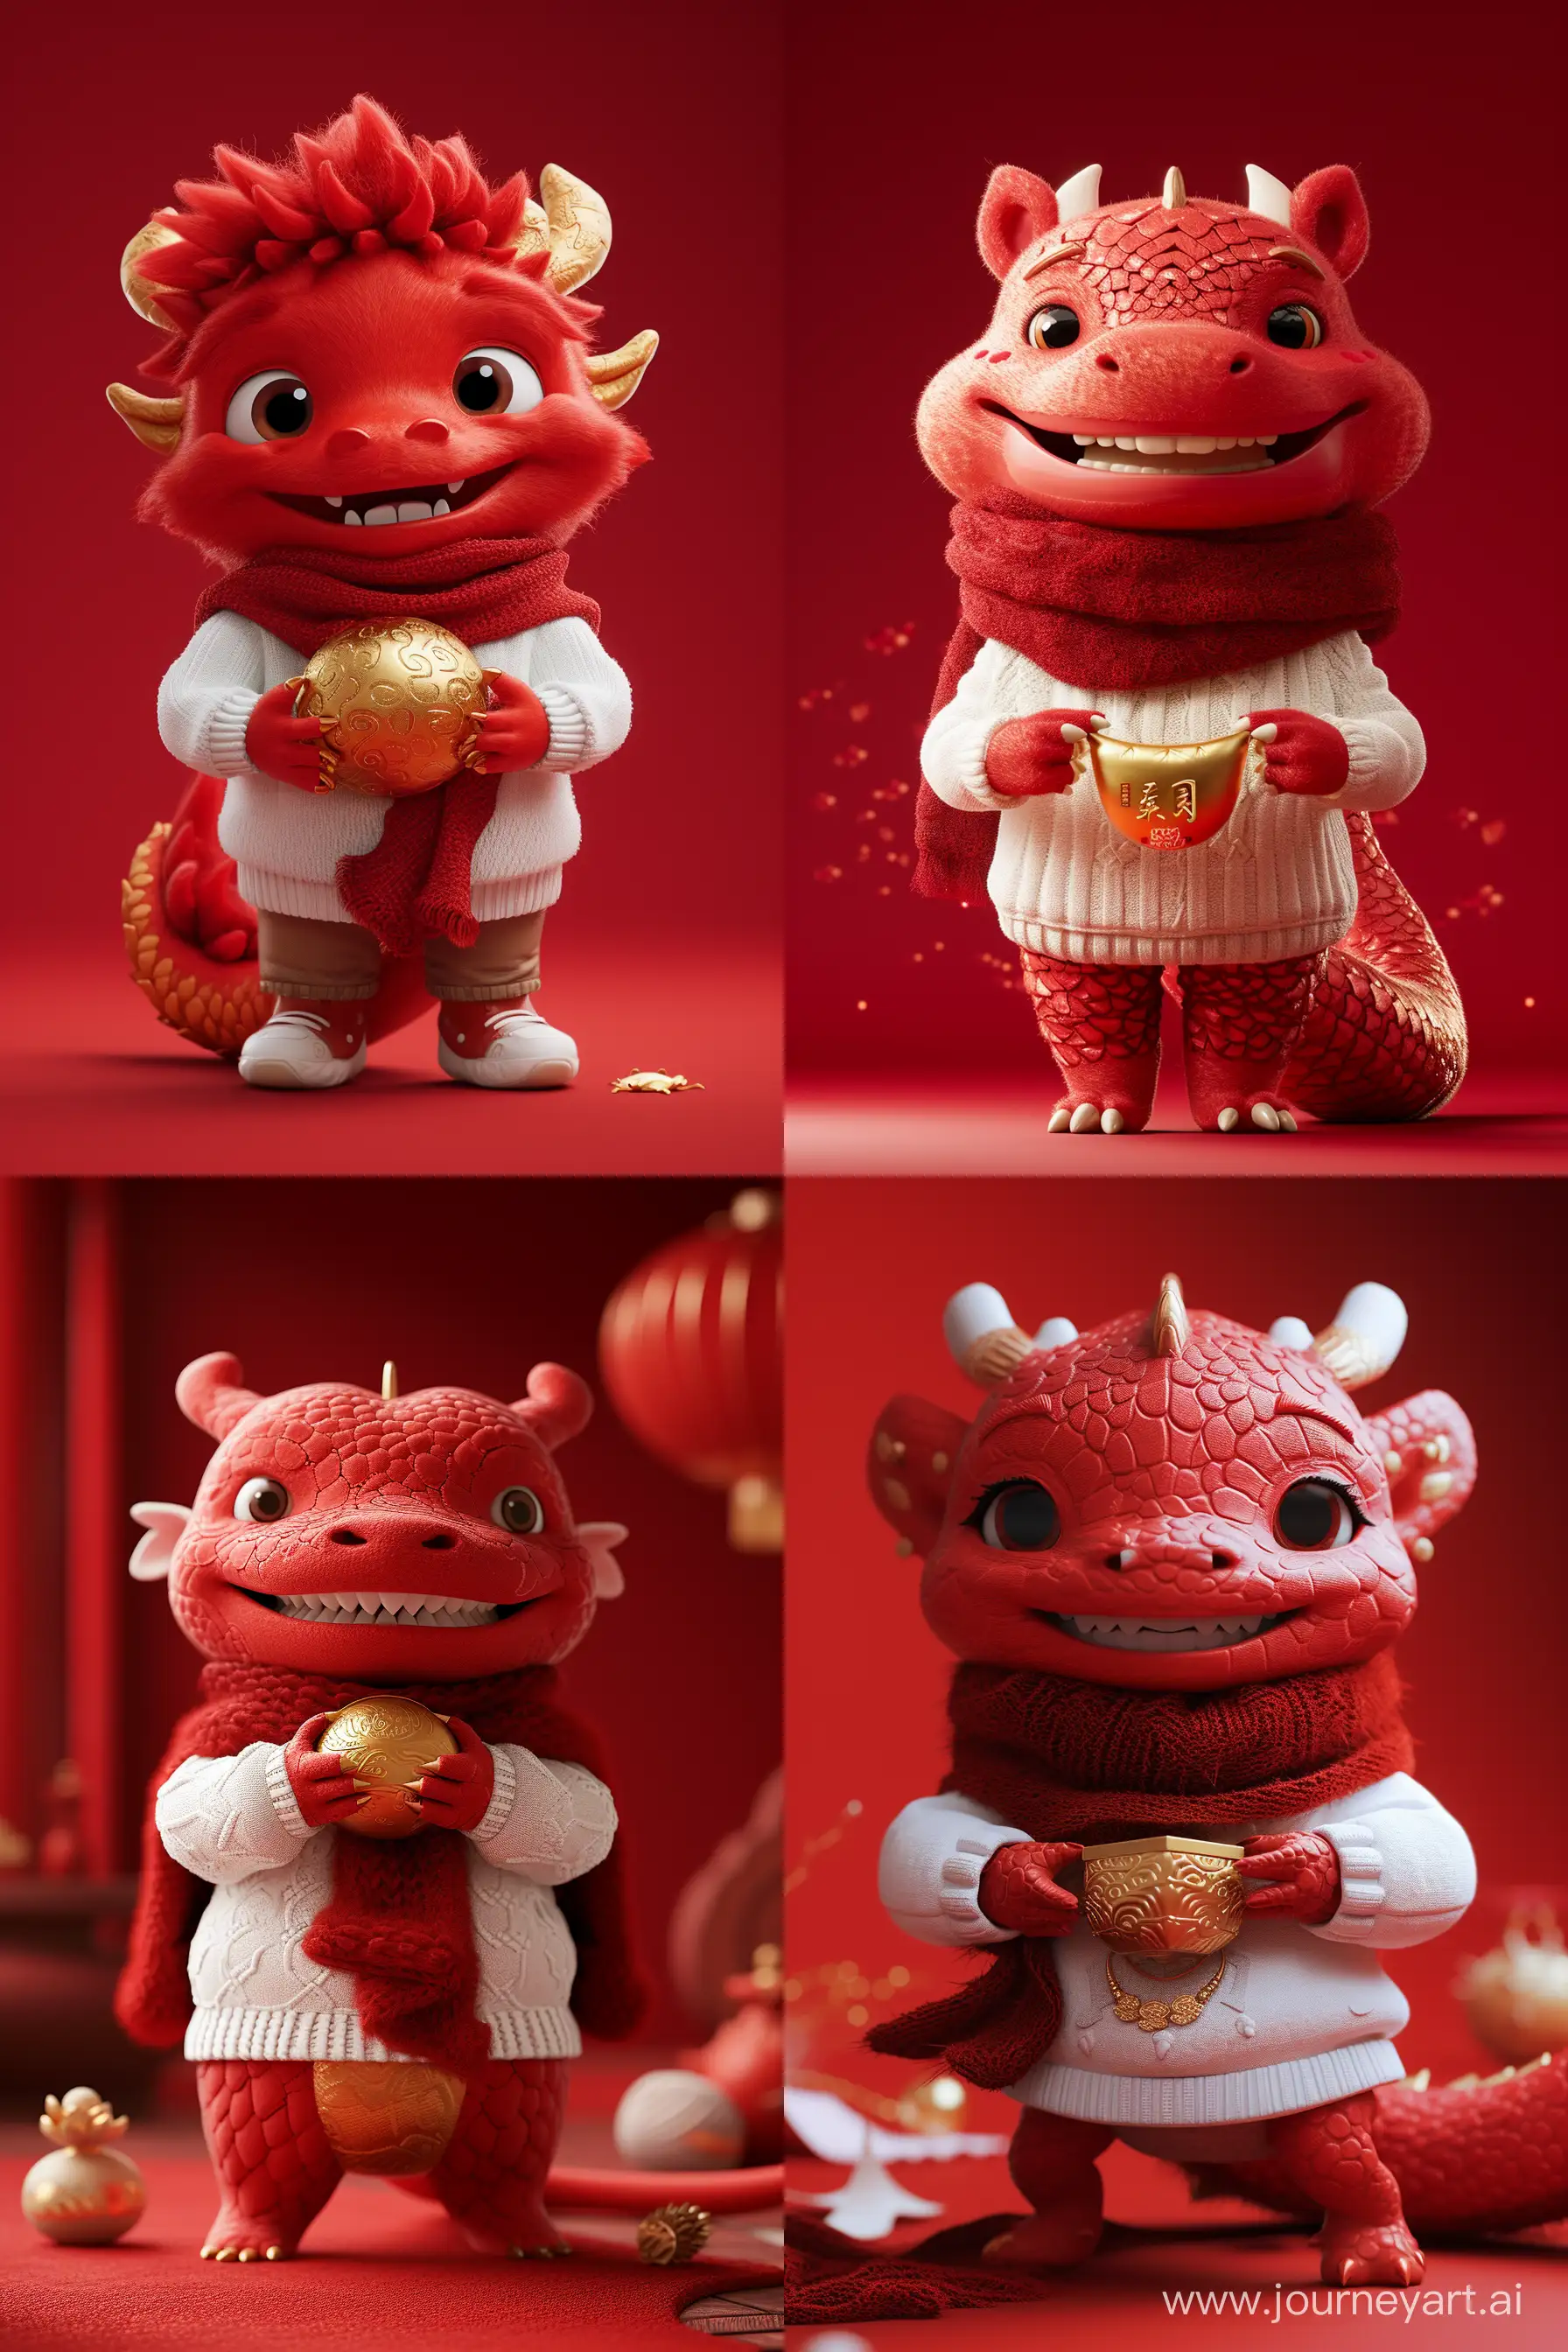 Joyful-Red-Chinese-Dragon-in-Festive-Attire-Holding-Gold-Ingot